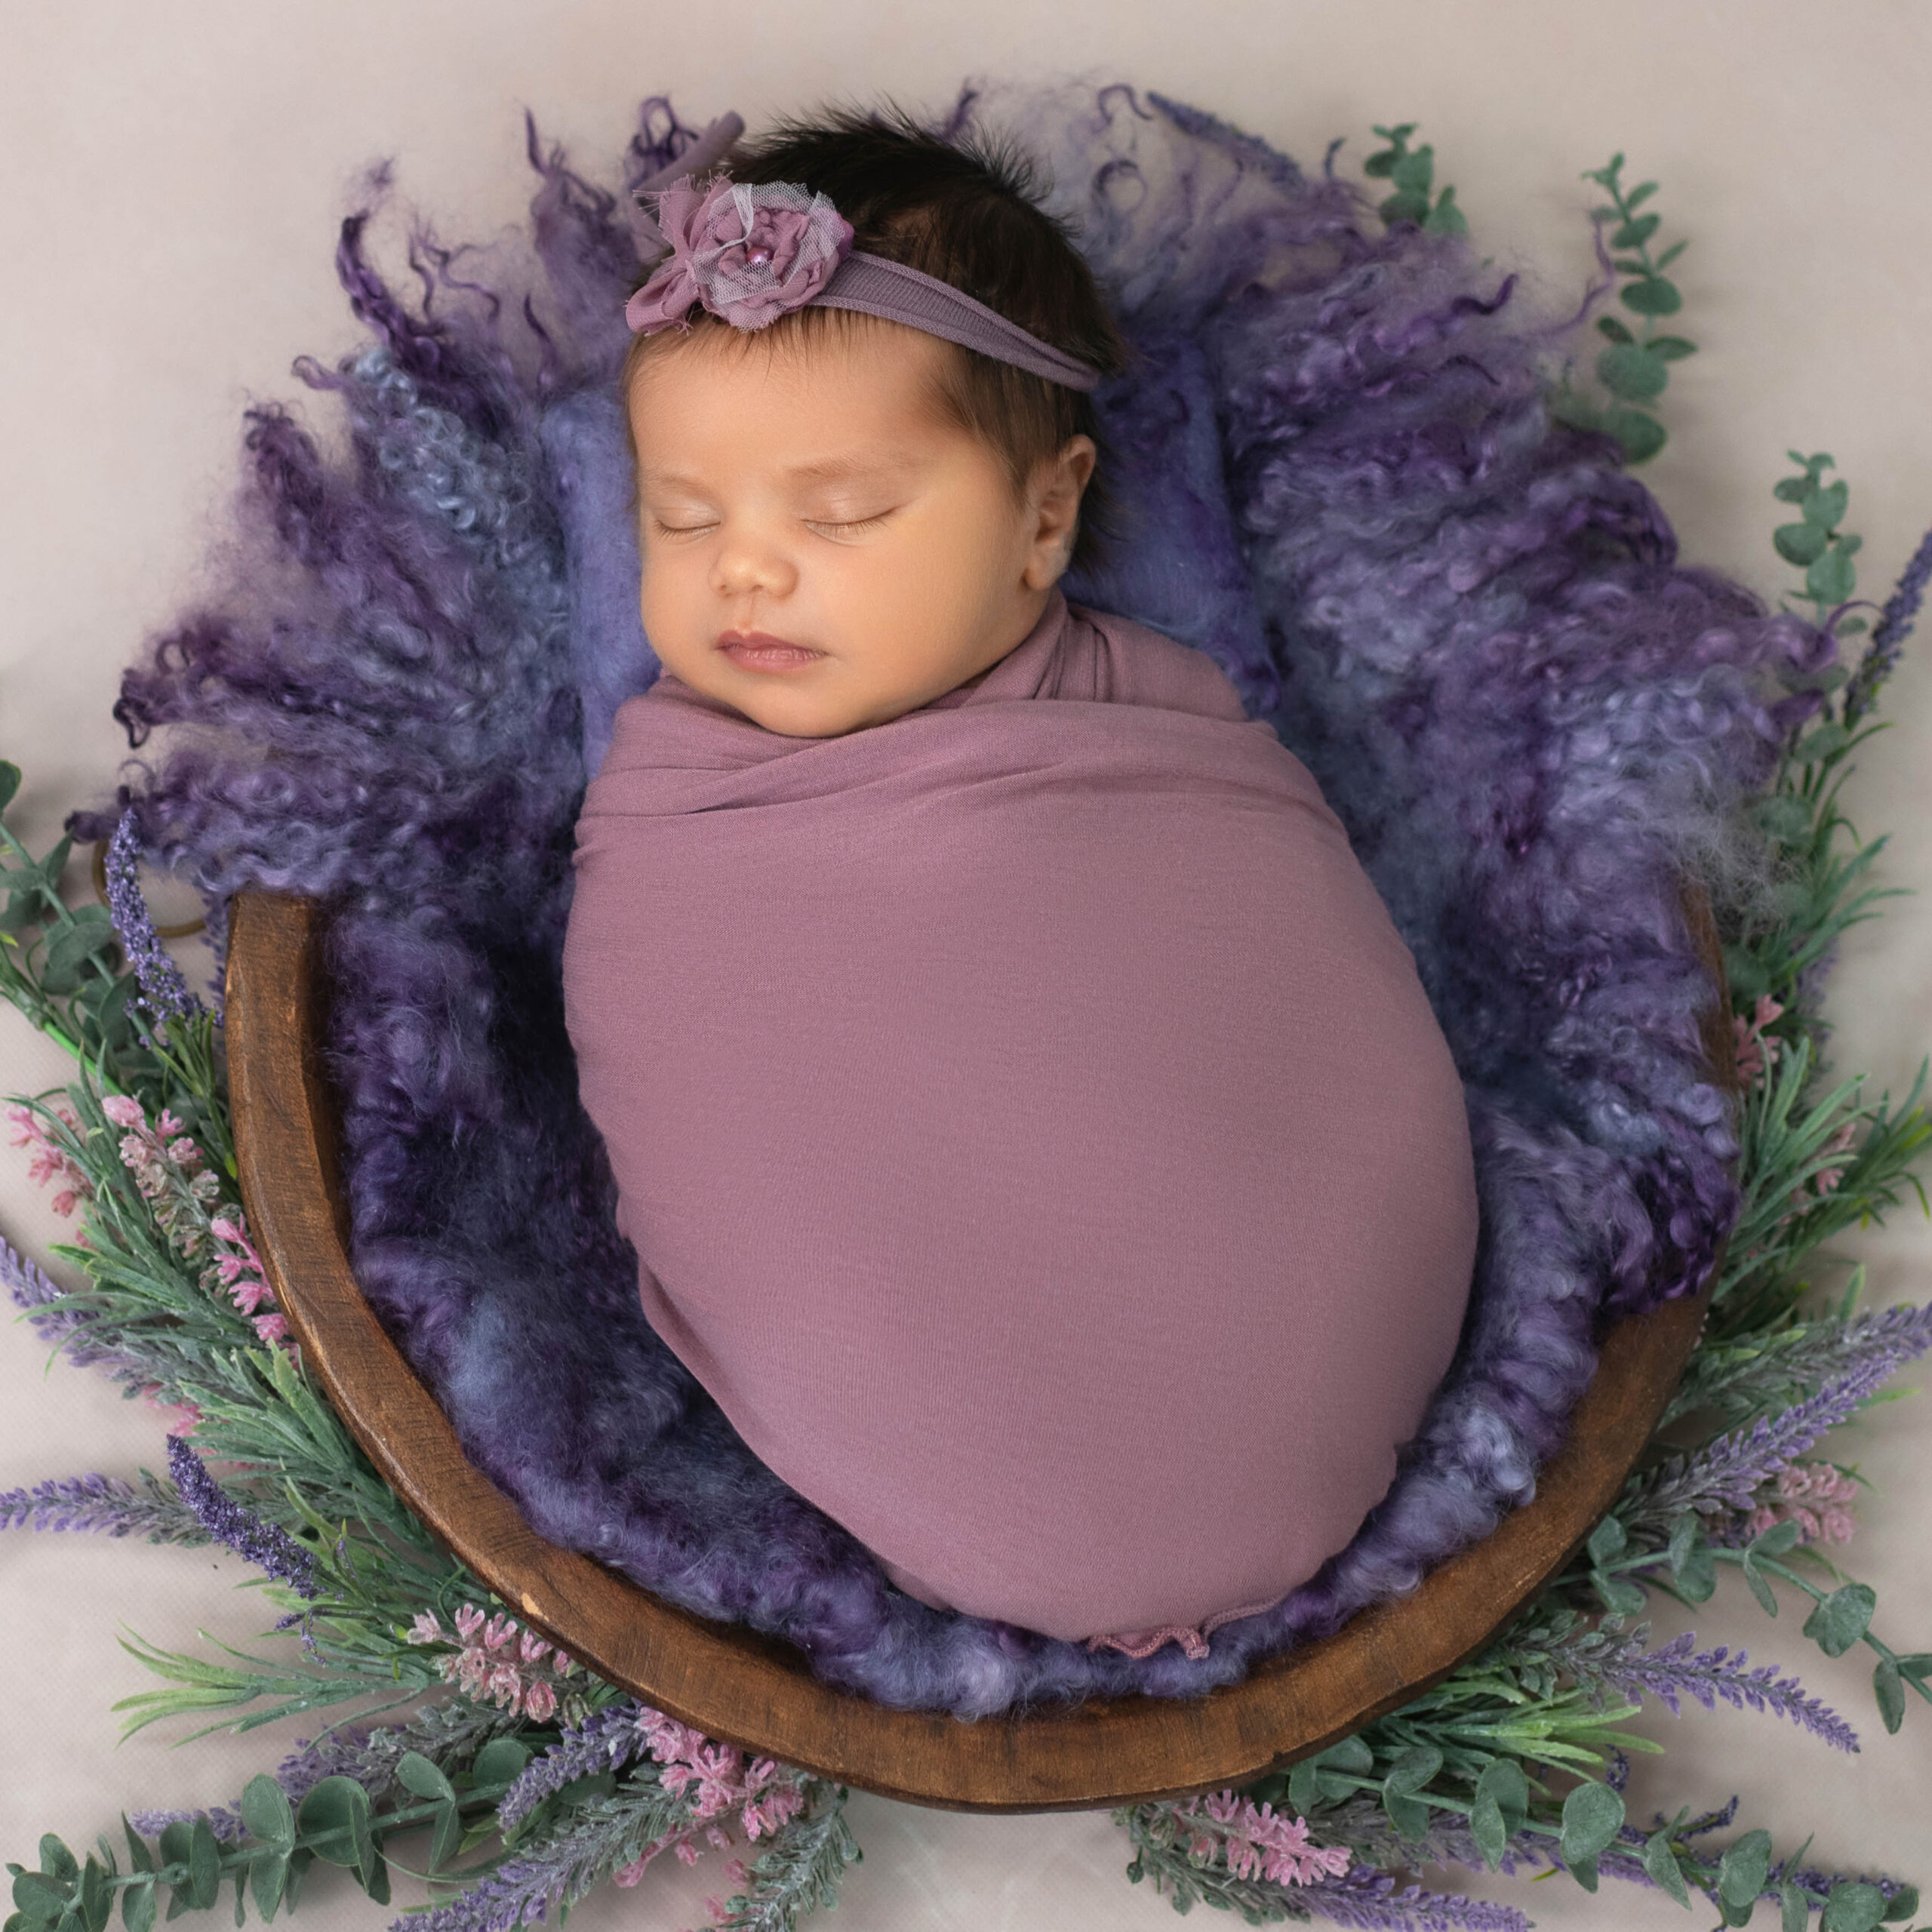 orange-county-newborn-girl-wrapped-in-purple